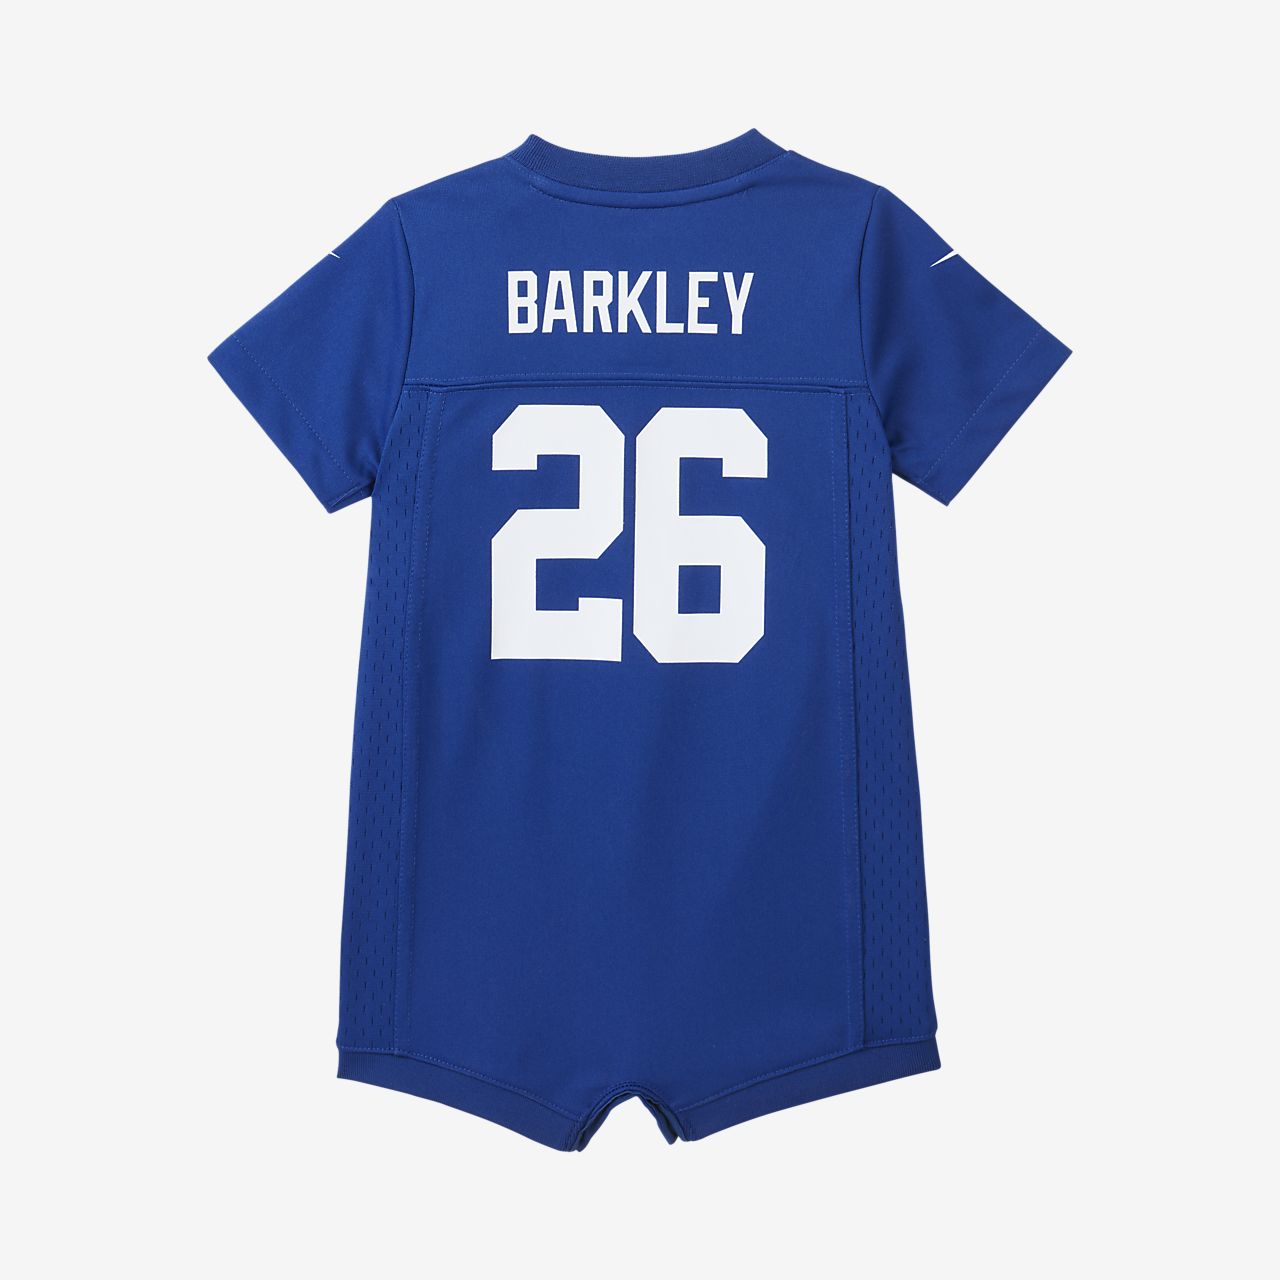 saquon barkley baby jersey